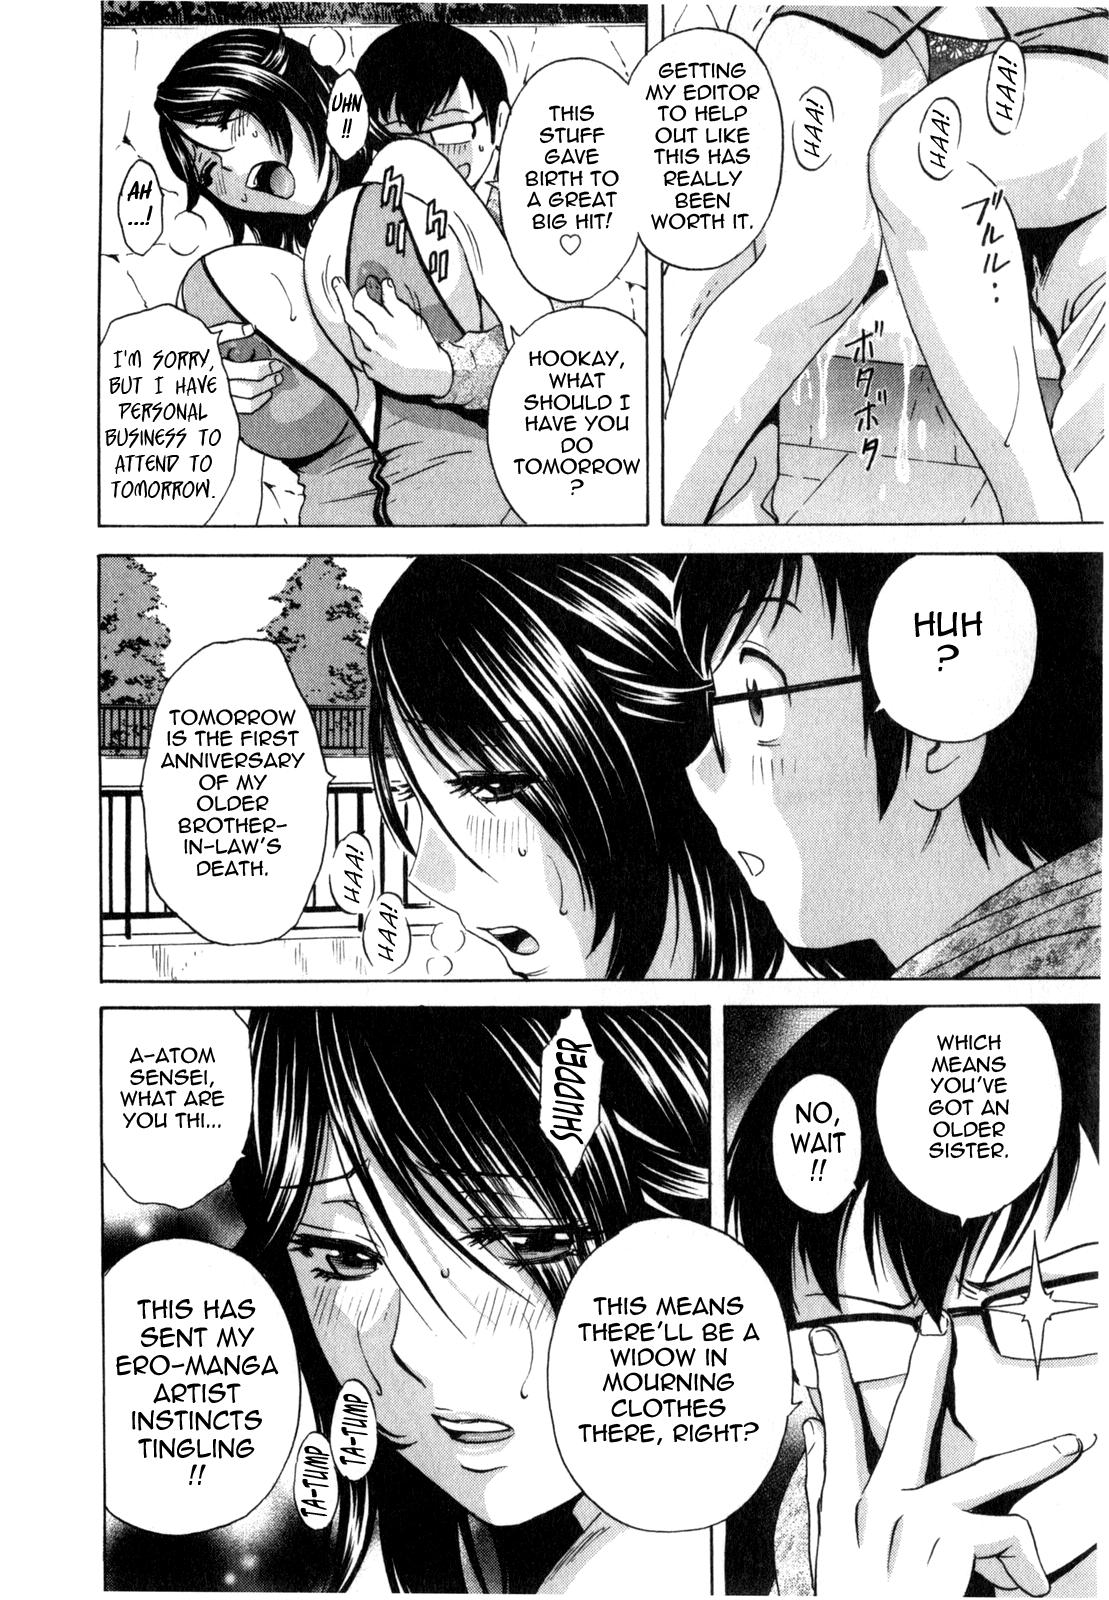 [Hidemaru] Life with Married Women Just Like a Manga 3 - Ch. 1-5 [English] {Tadanohito} 91